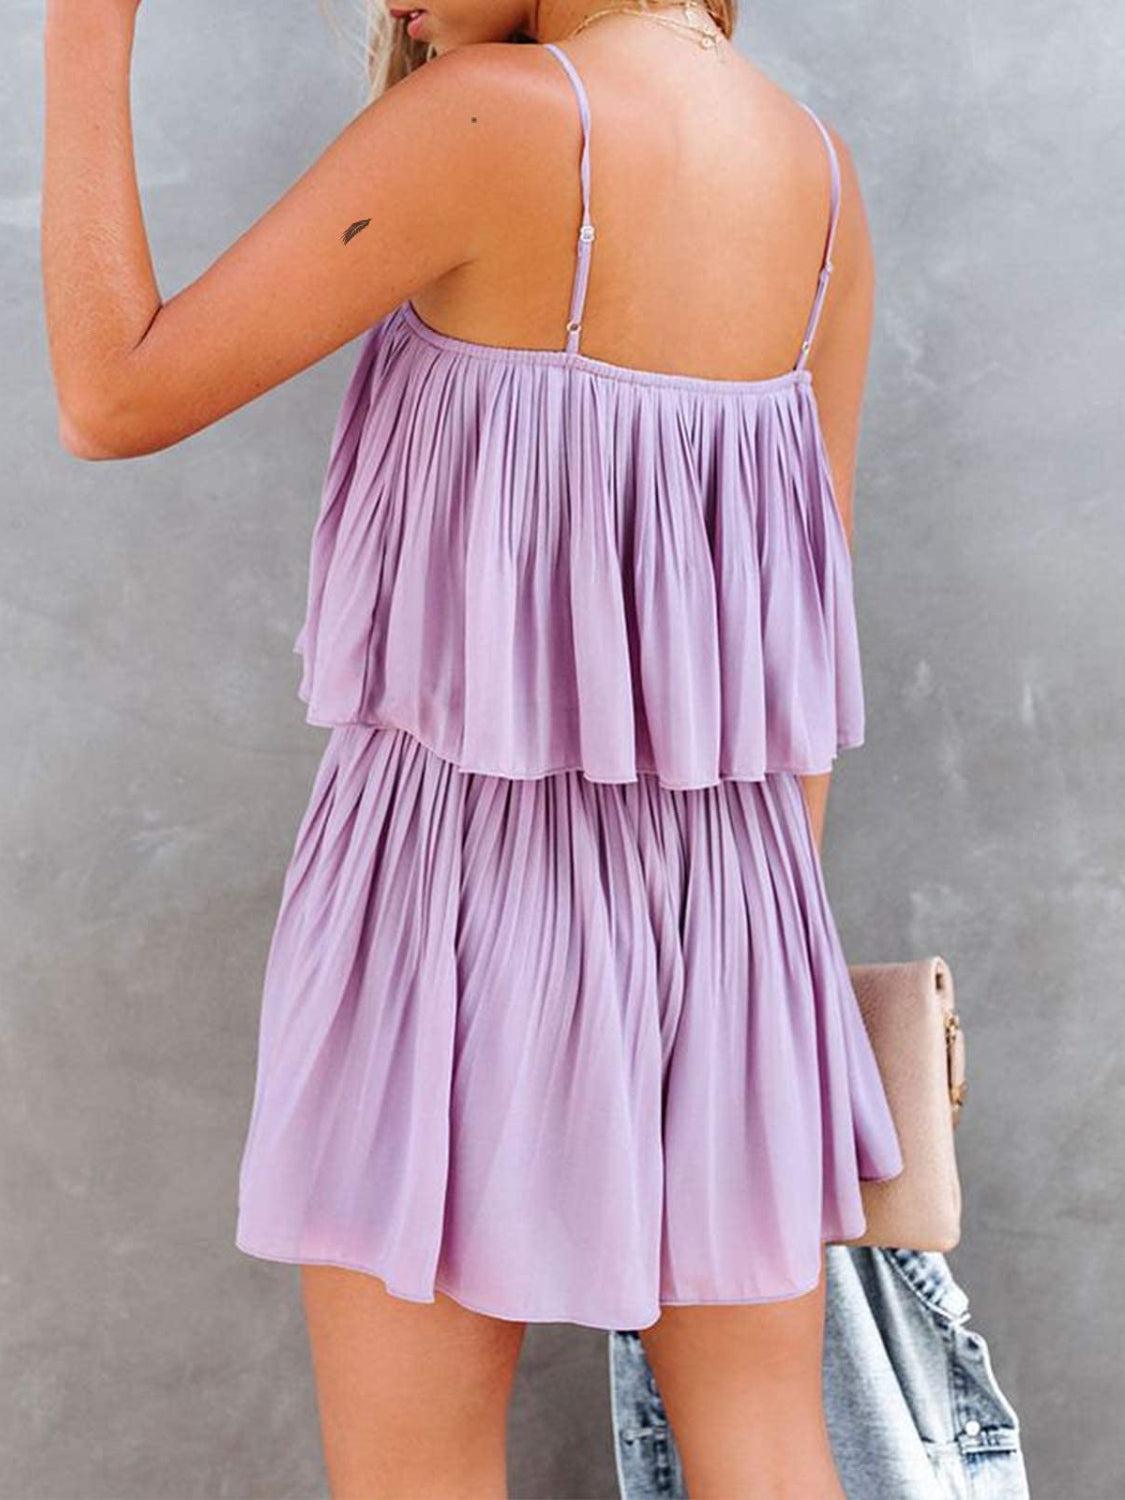 the back of a woman's body wearing a purple dress